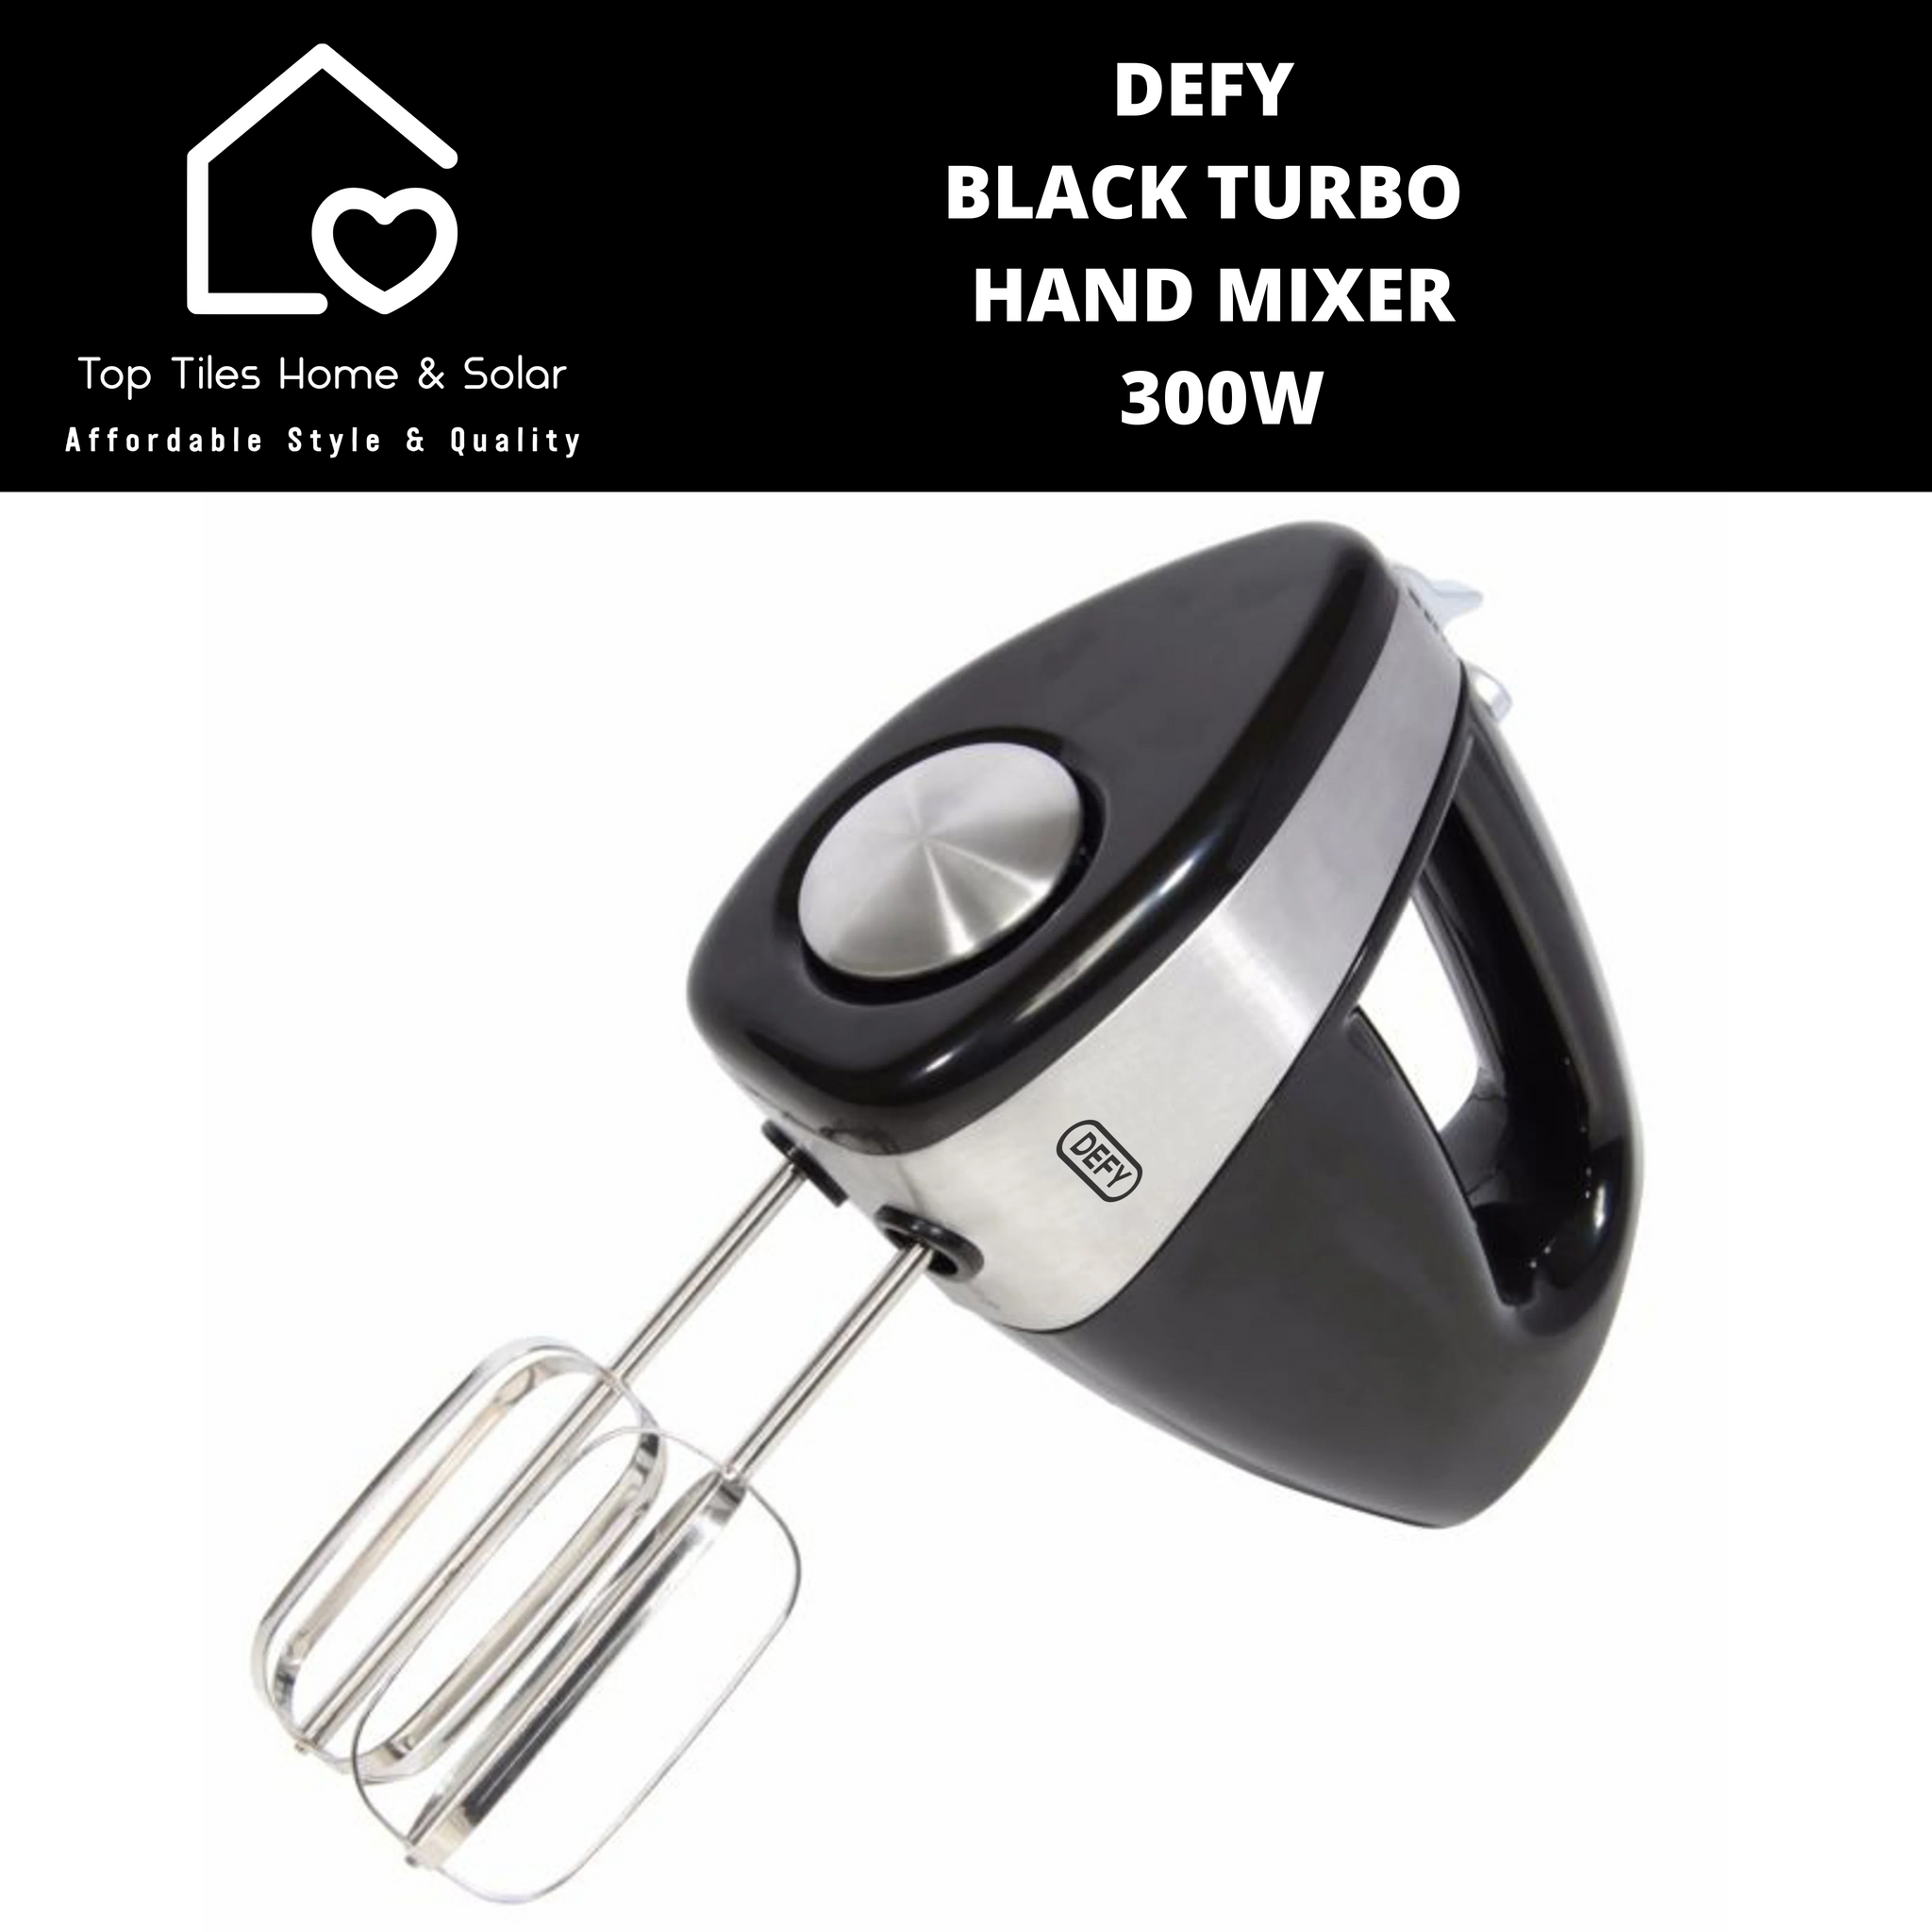 Turbo Solar - Hand & Black – Mixer Defy HM5040B Tiles Home 300W Top